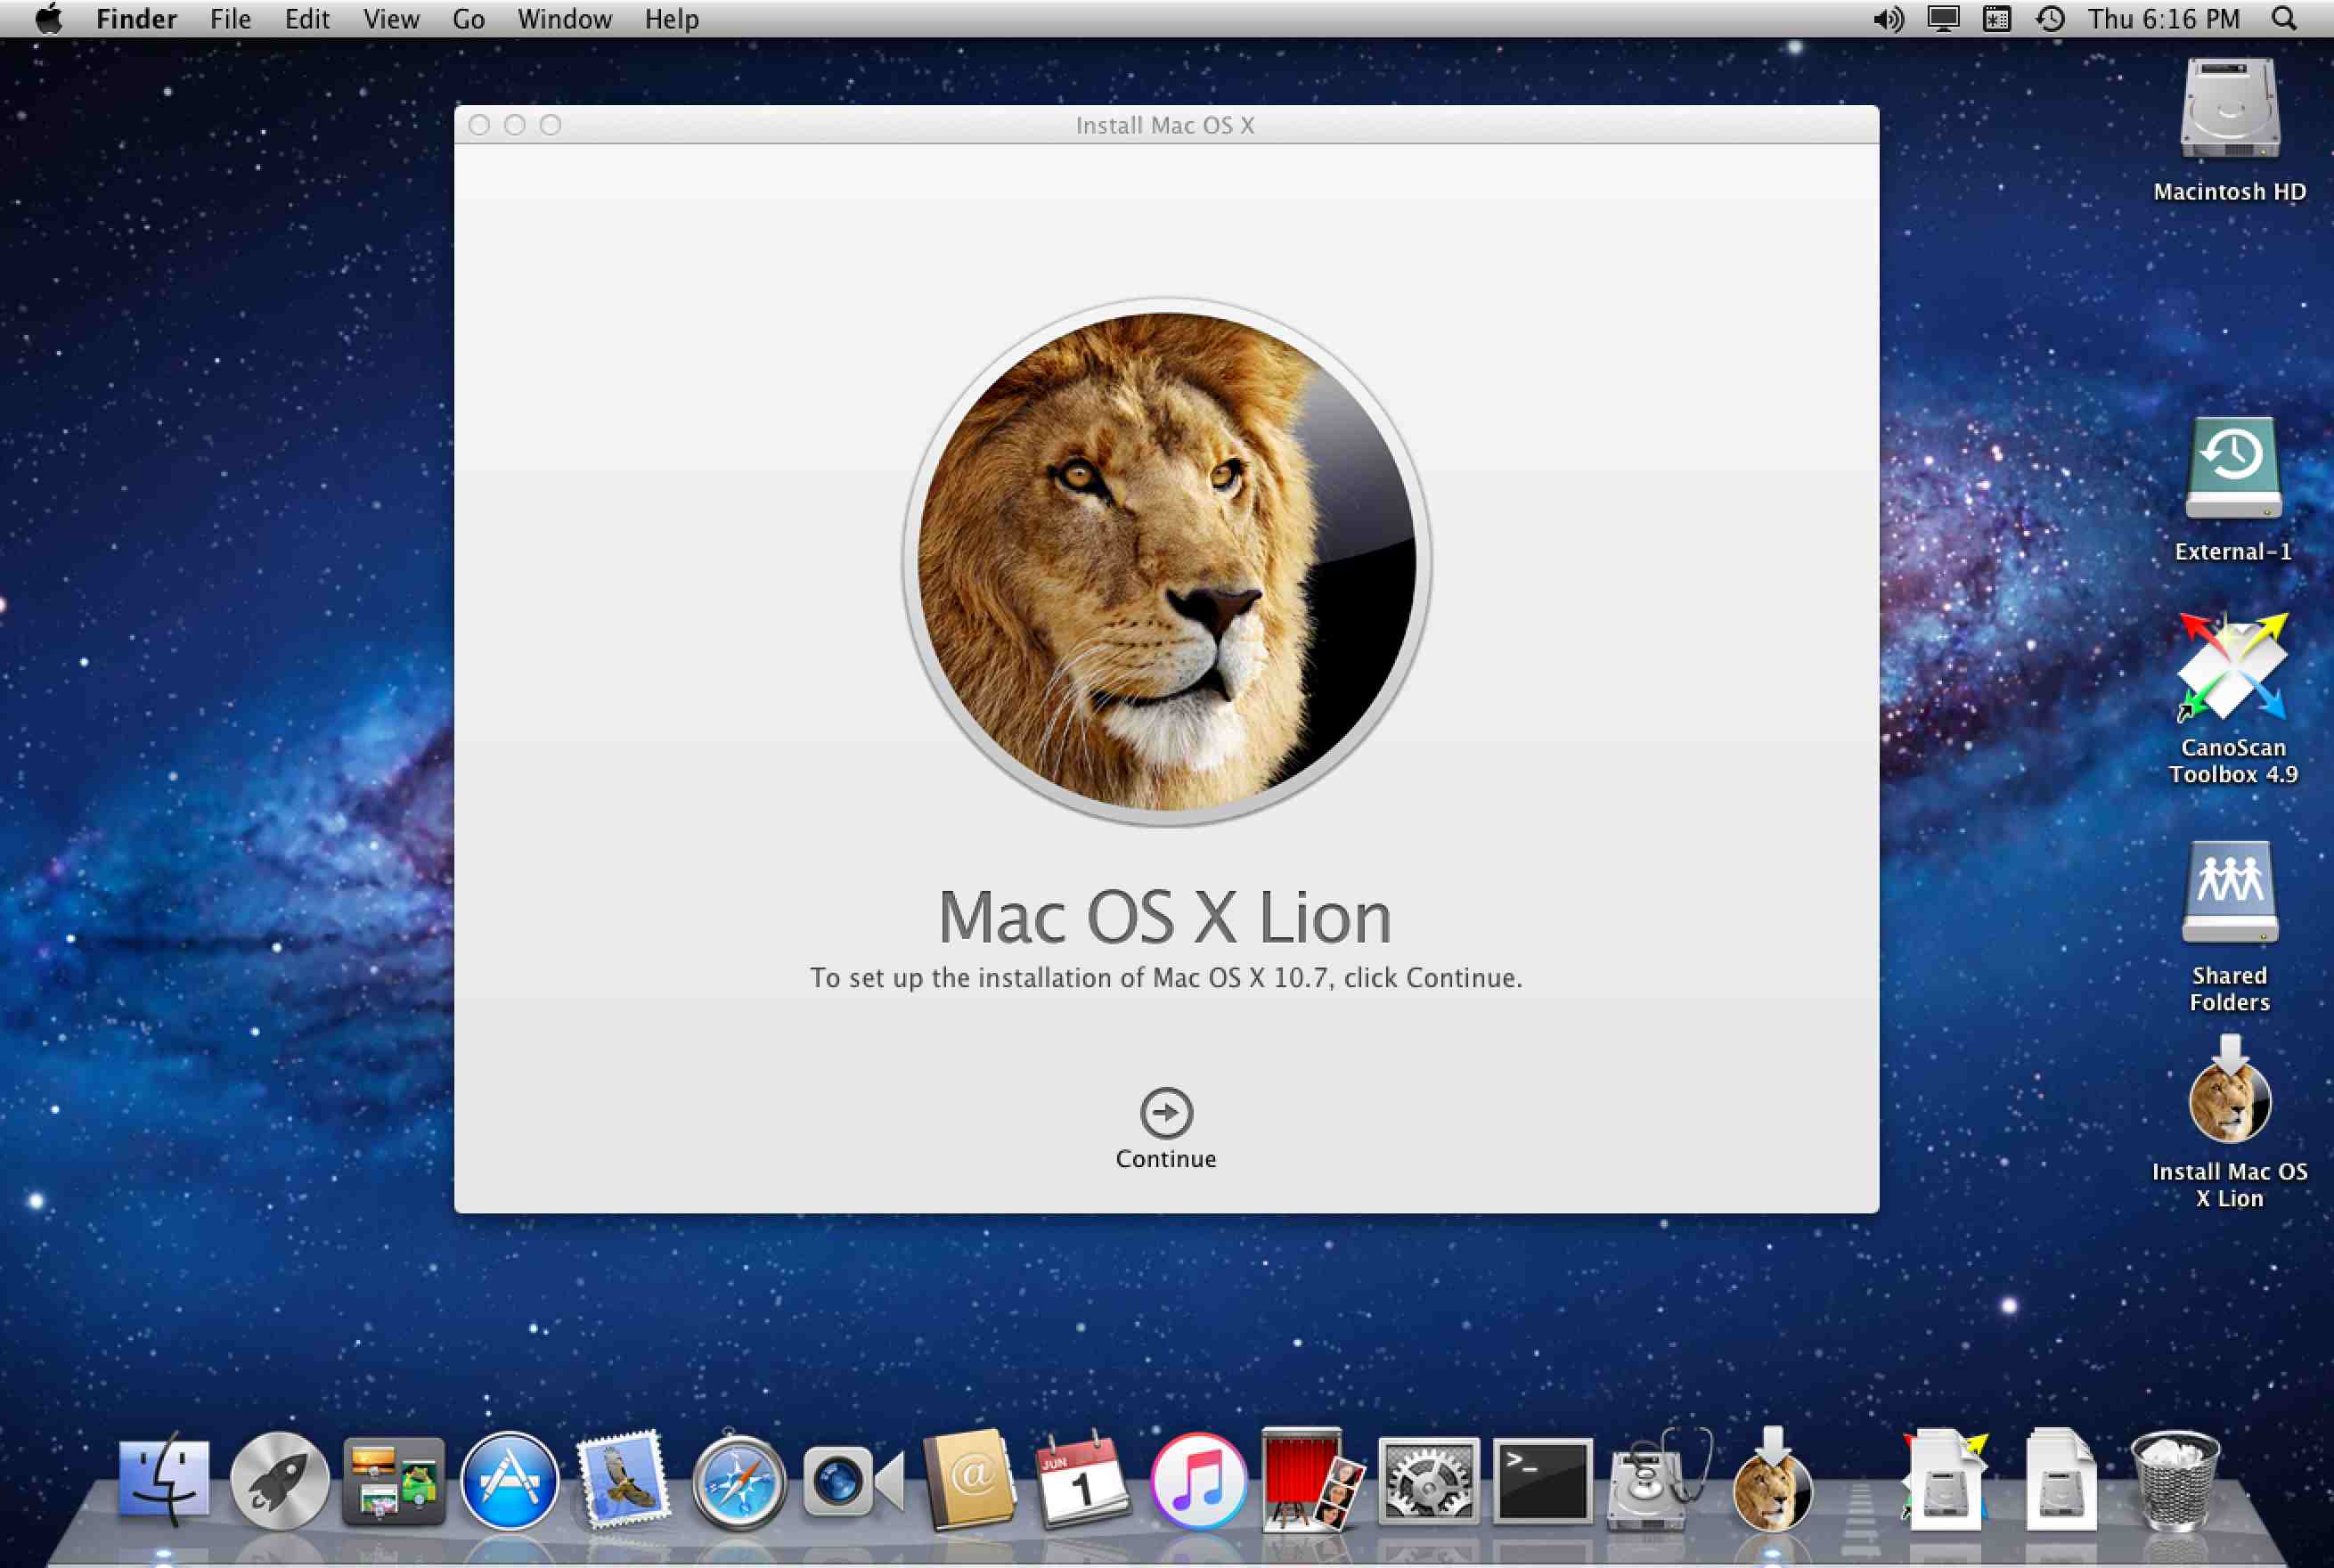 Download free mac os x lion 10.7.2 mac dmg